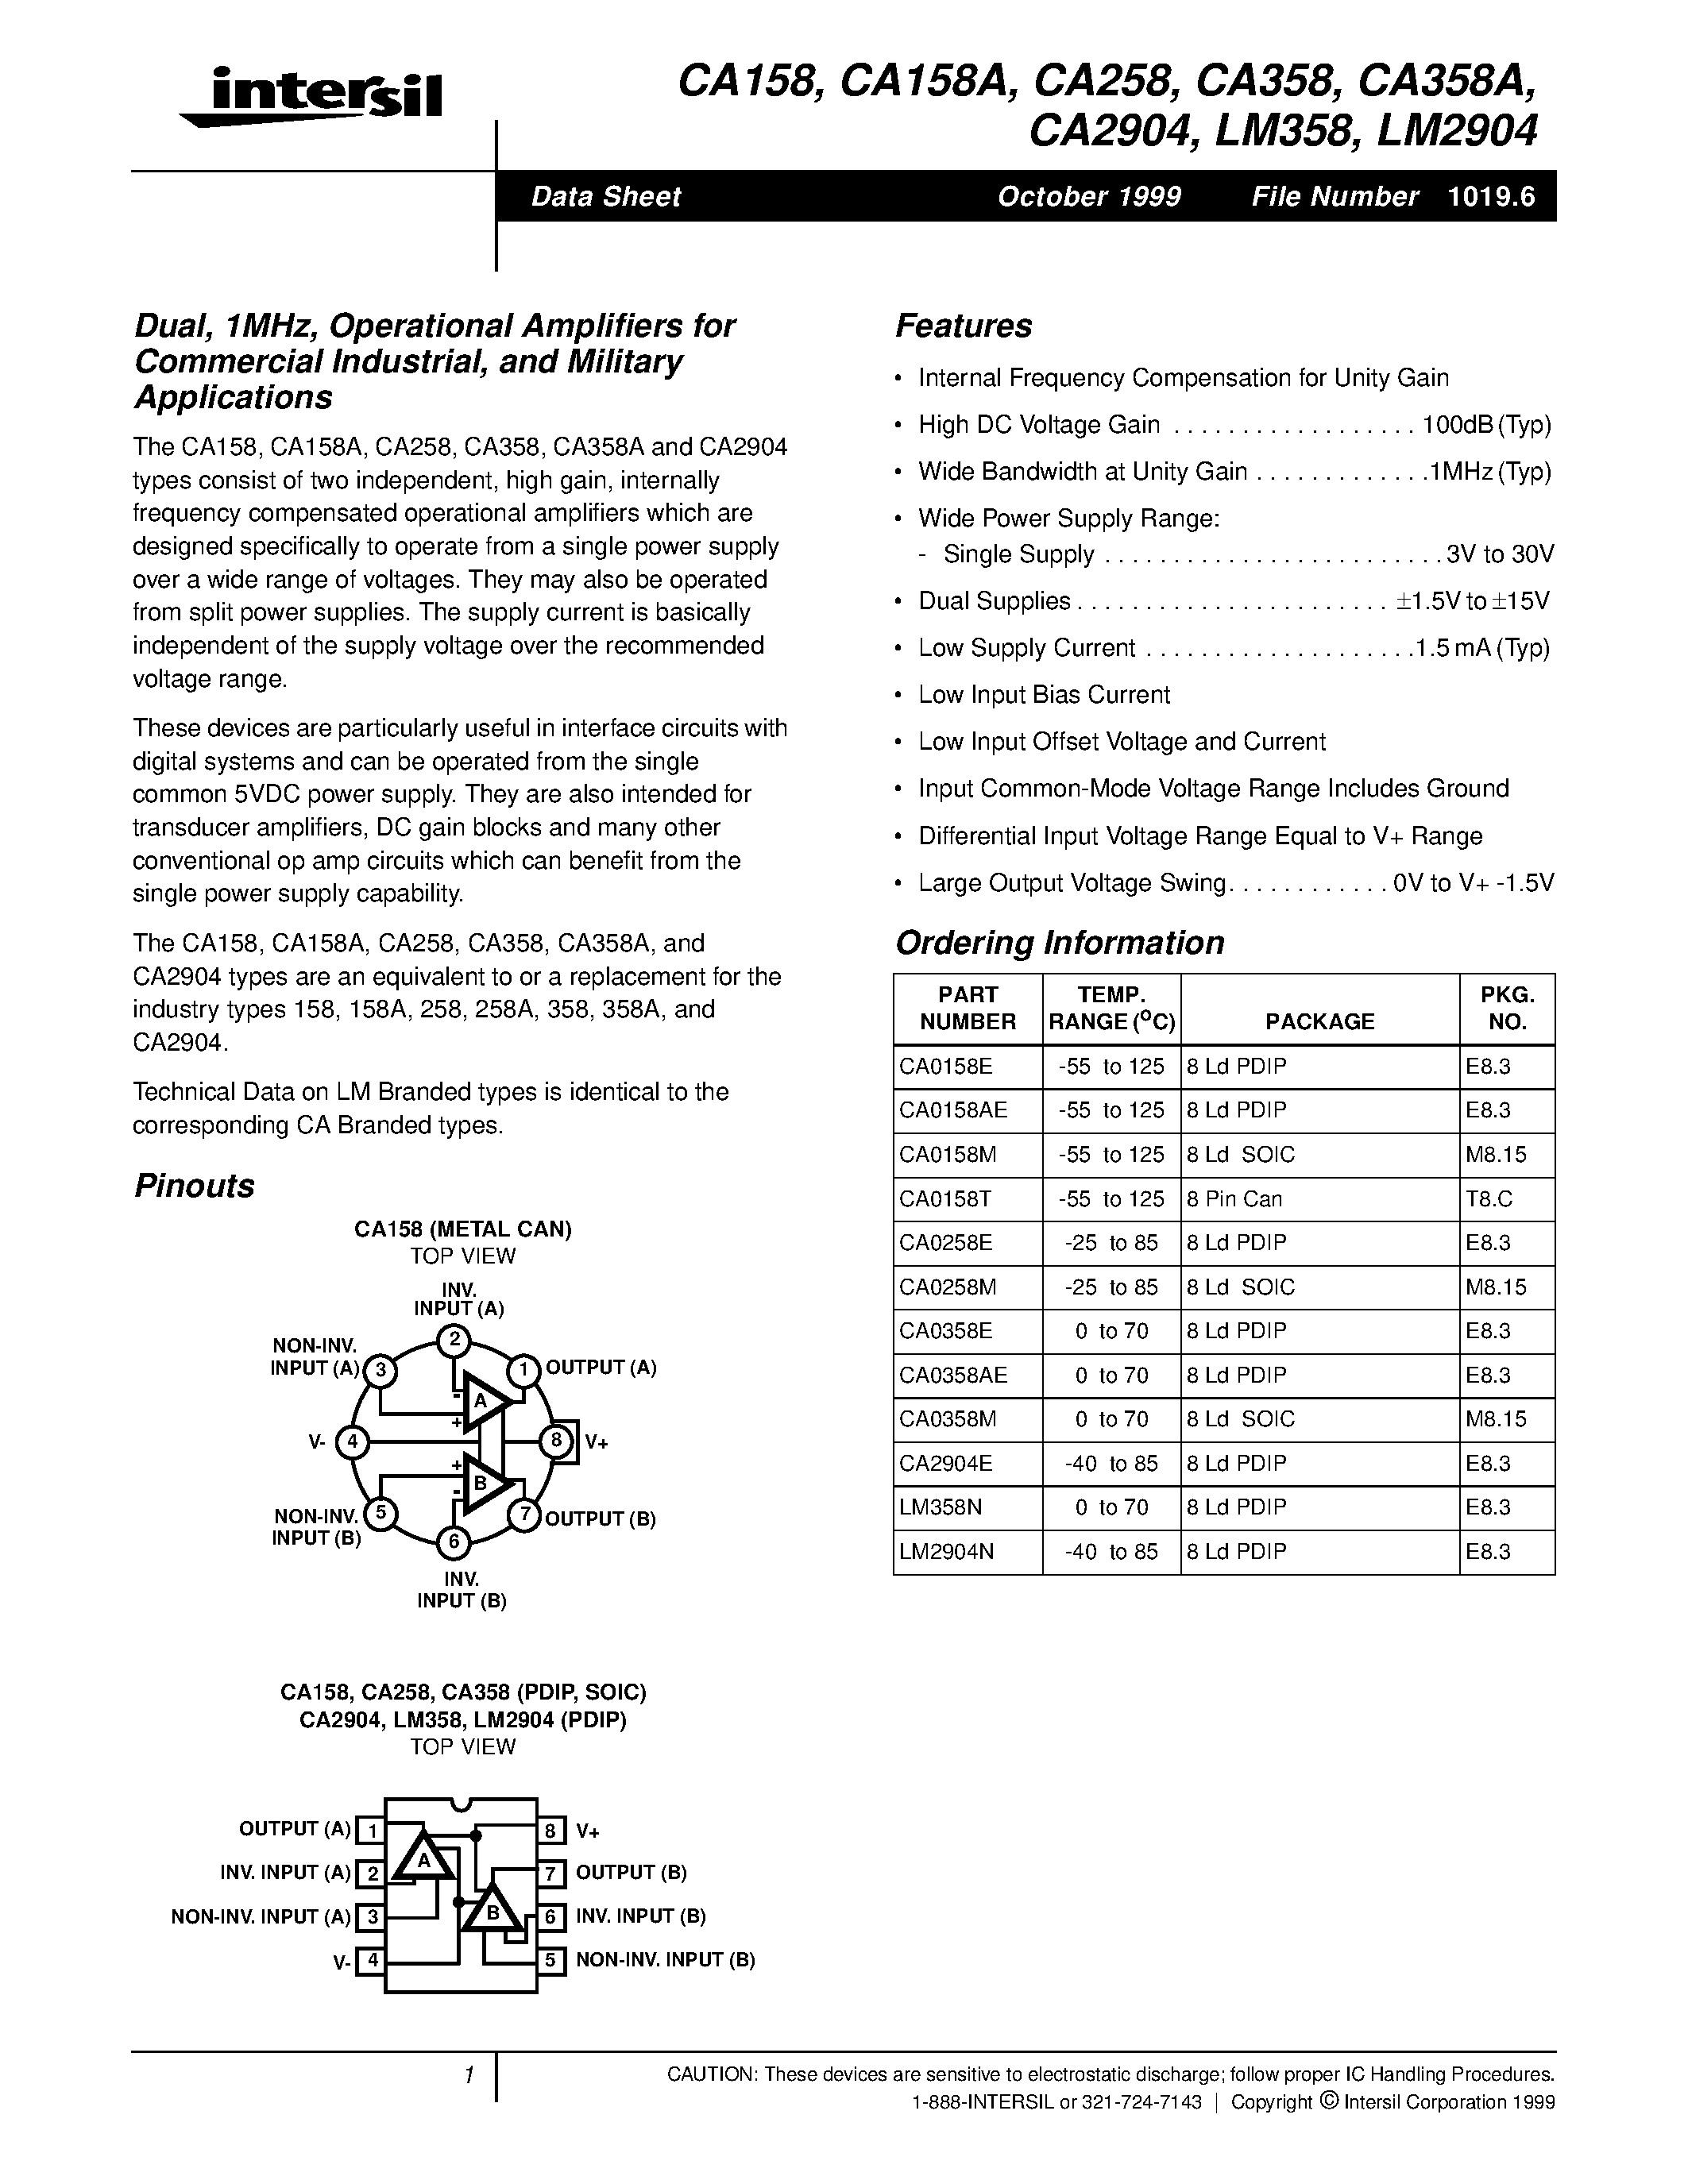 Даташит CA2904-Operational Amplifiers страница 1